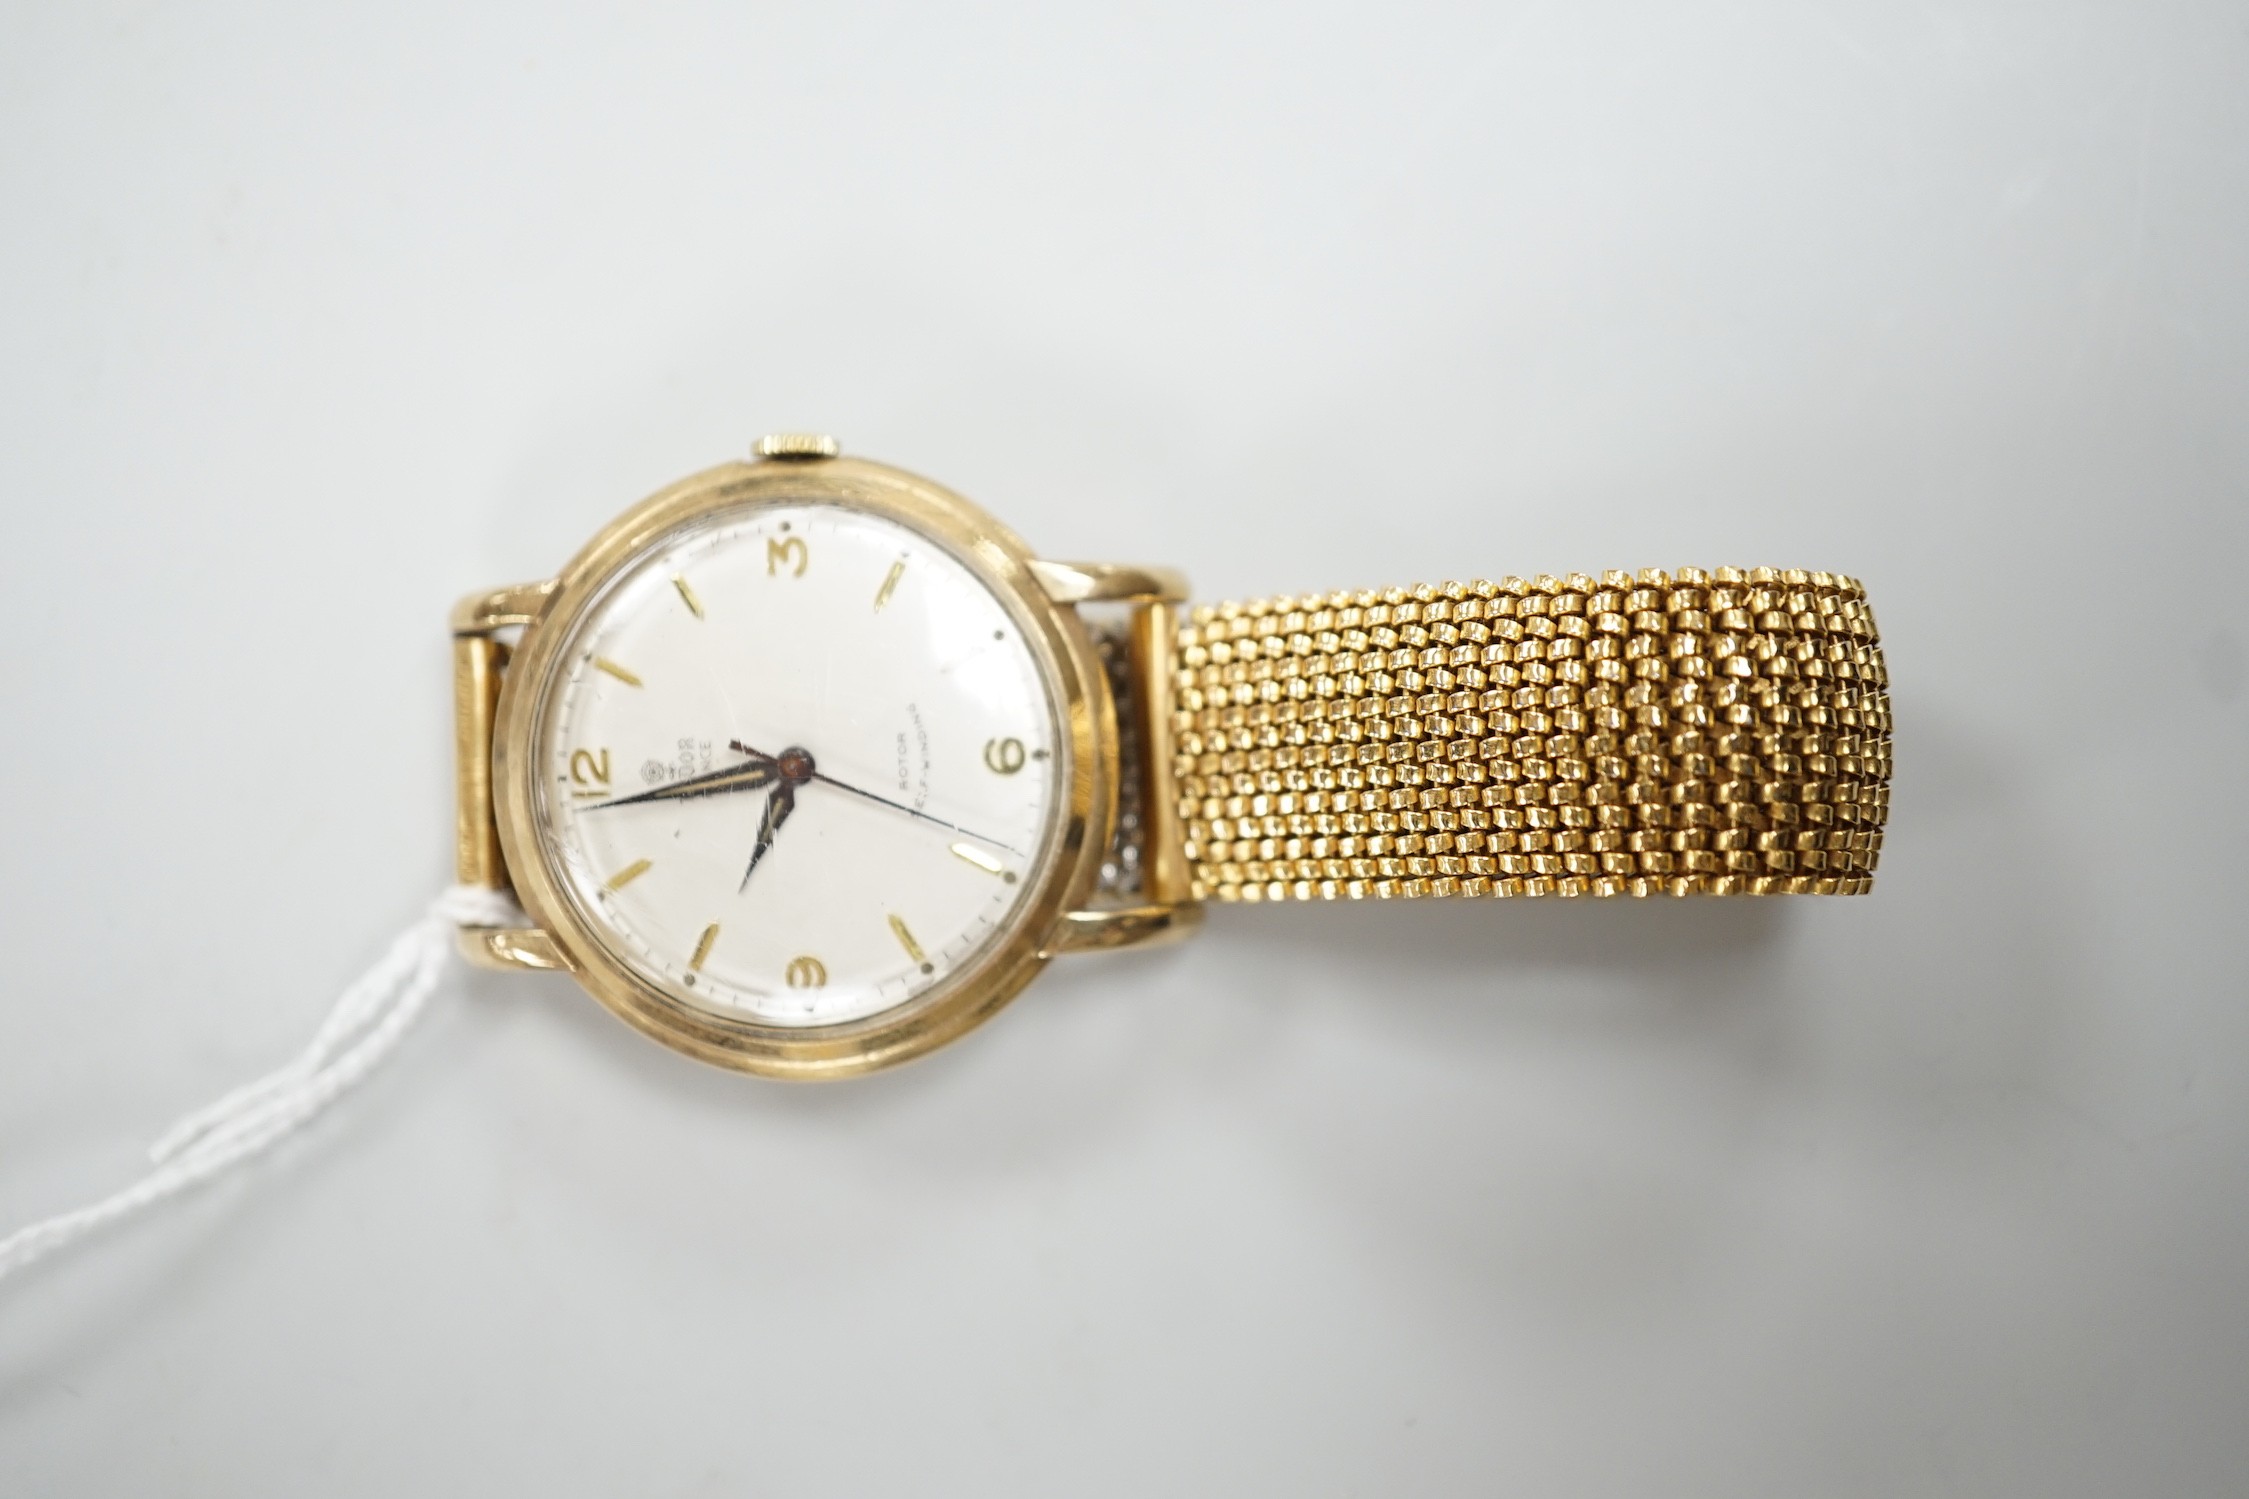 A gentleman's 9ct gold Tudor Prince Rotor Self-Winding wrist watch, on later associated flexible bracelet, case diameter 35mm, with Tudor box.